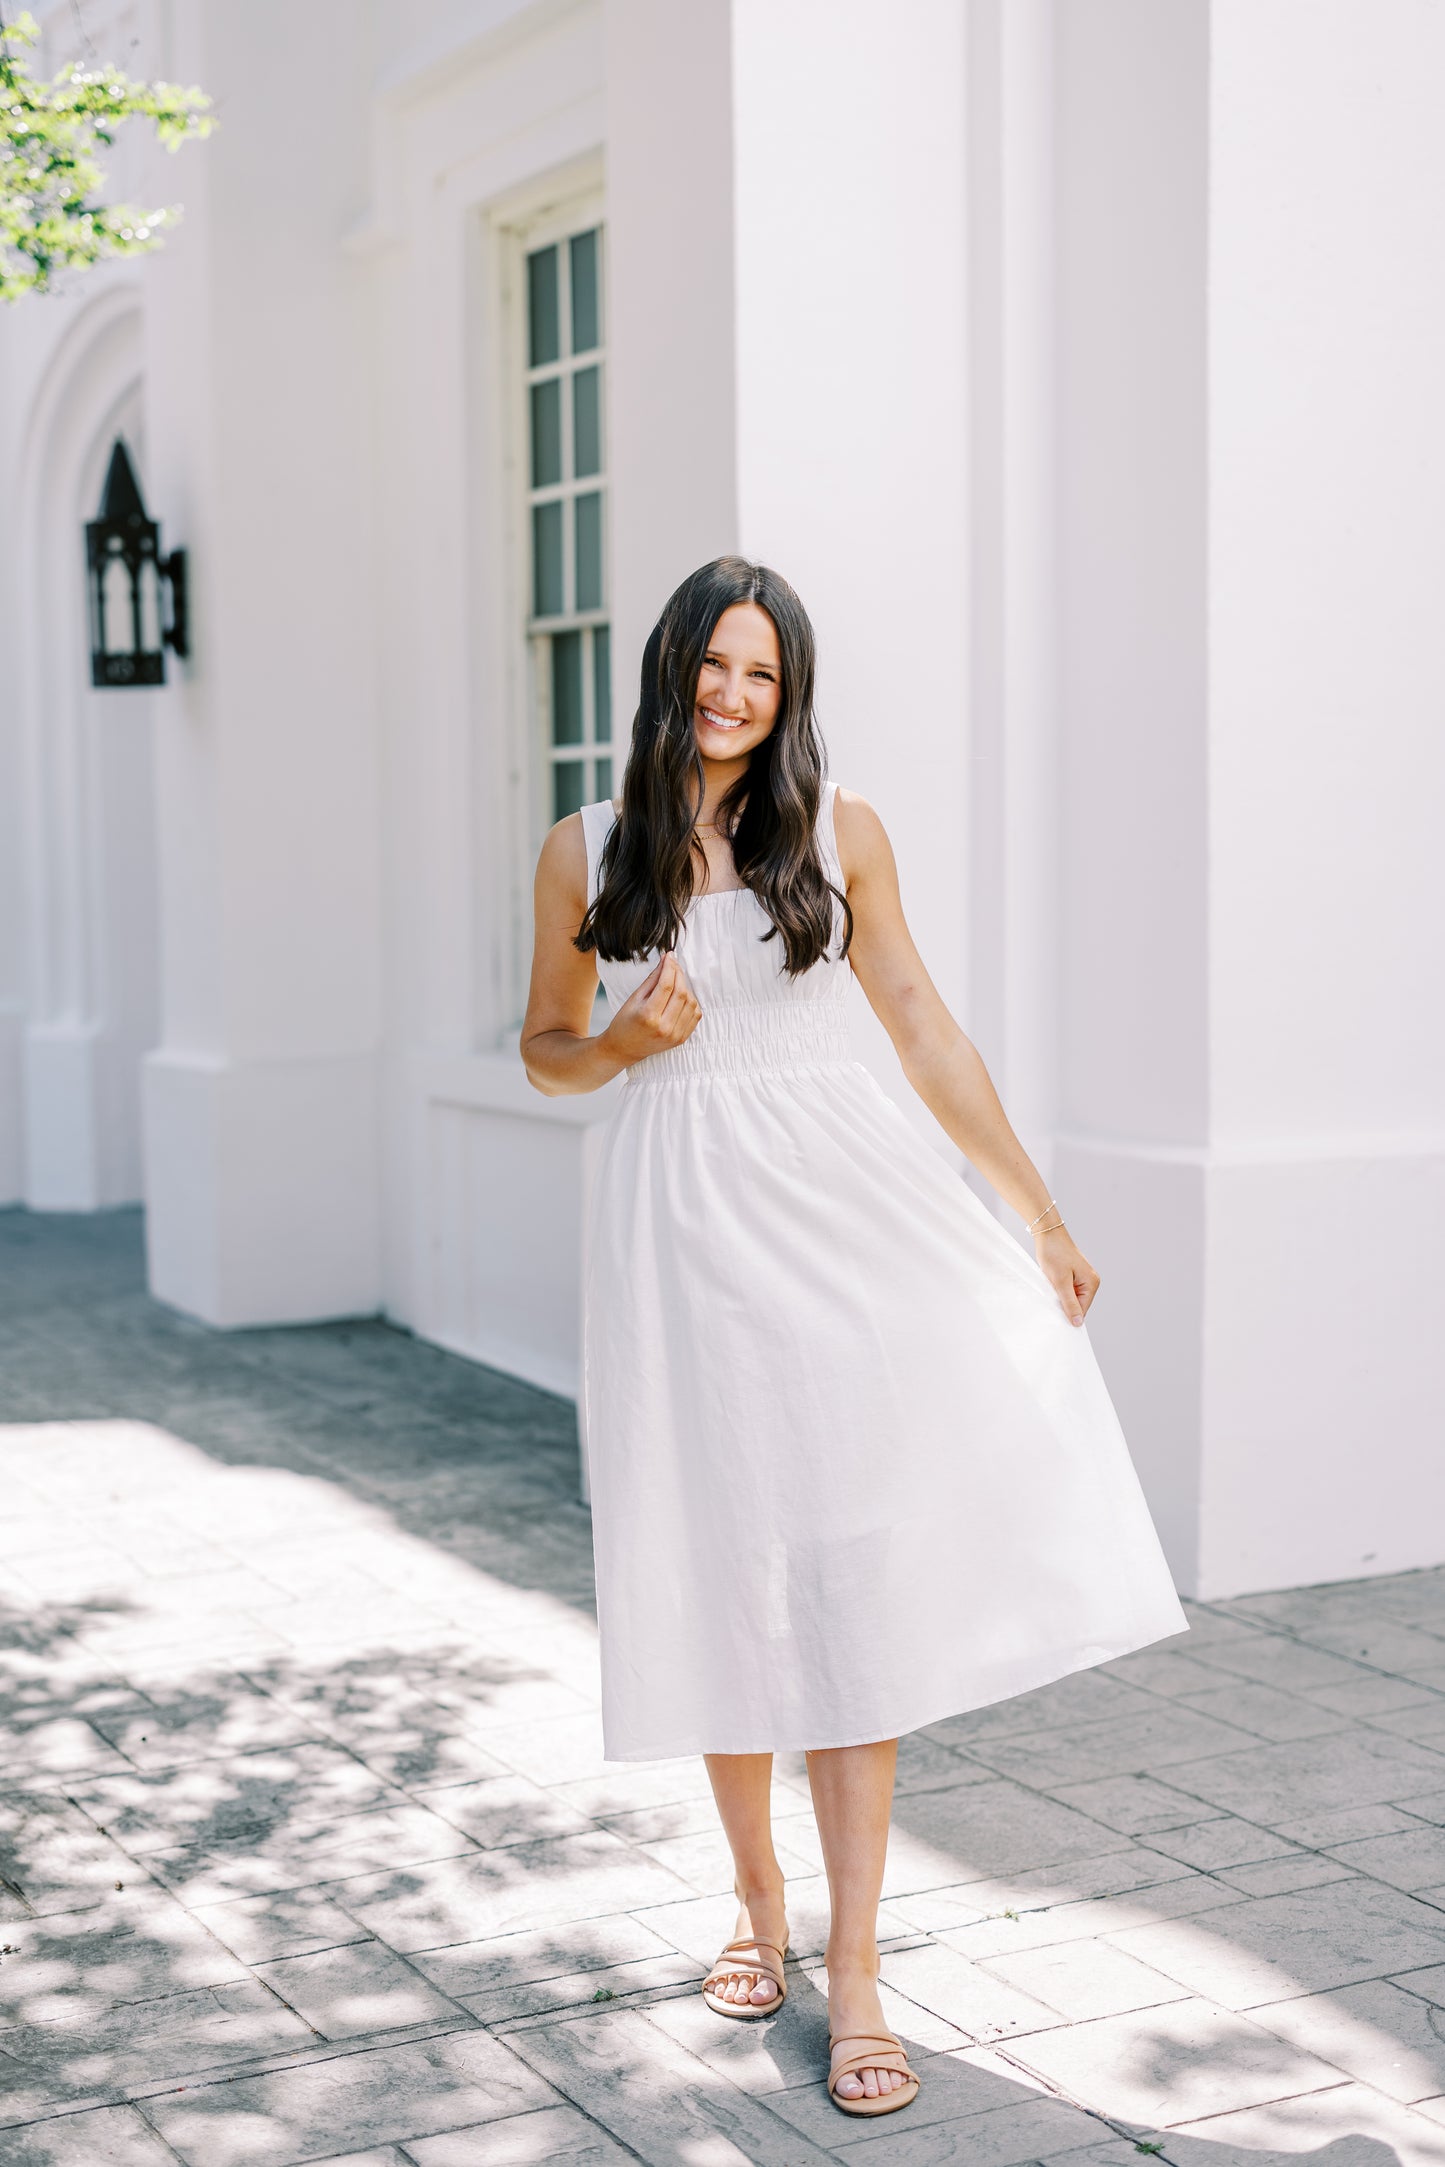 The Harper Dress in White